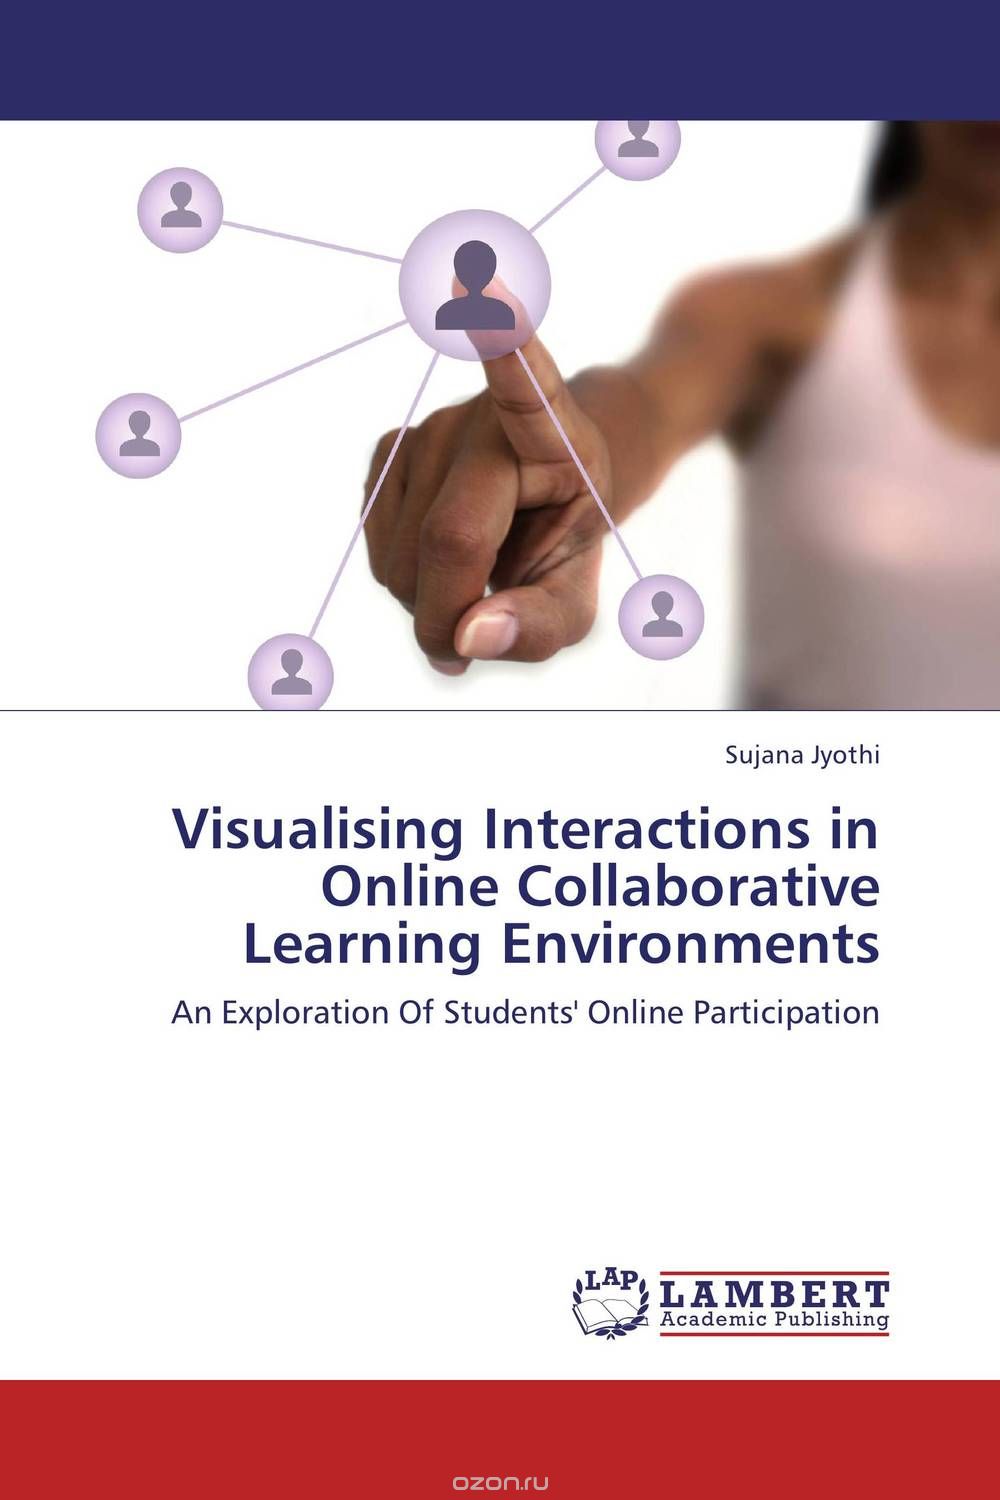 Скачать книгу "Visualising Interactions in Online Collaborative Learning Environments"